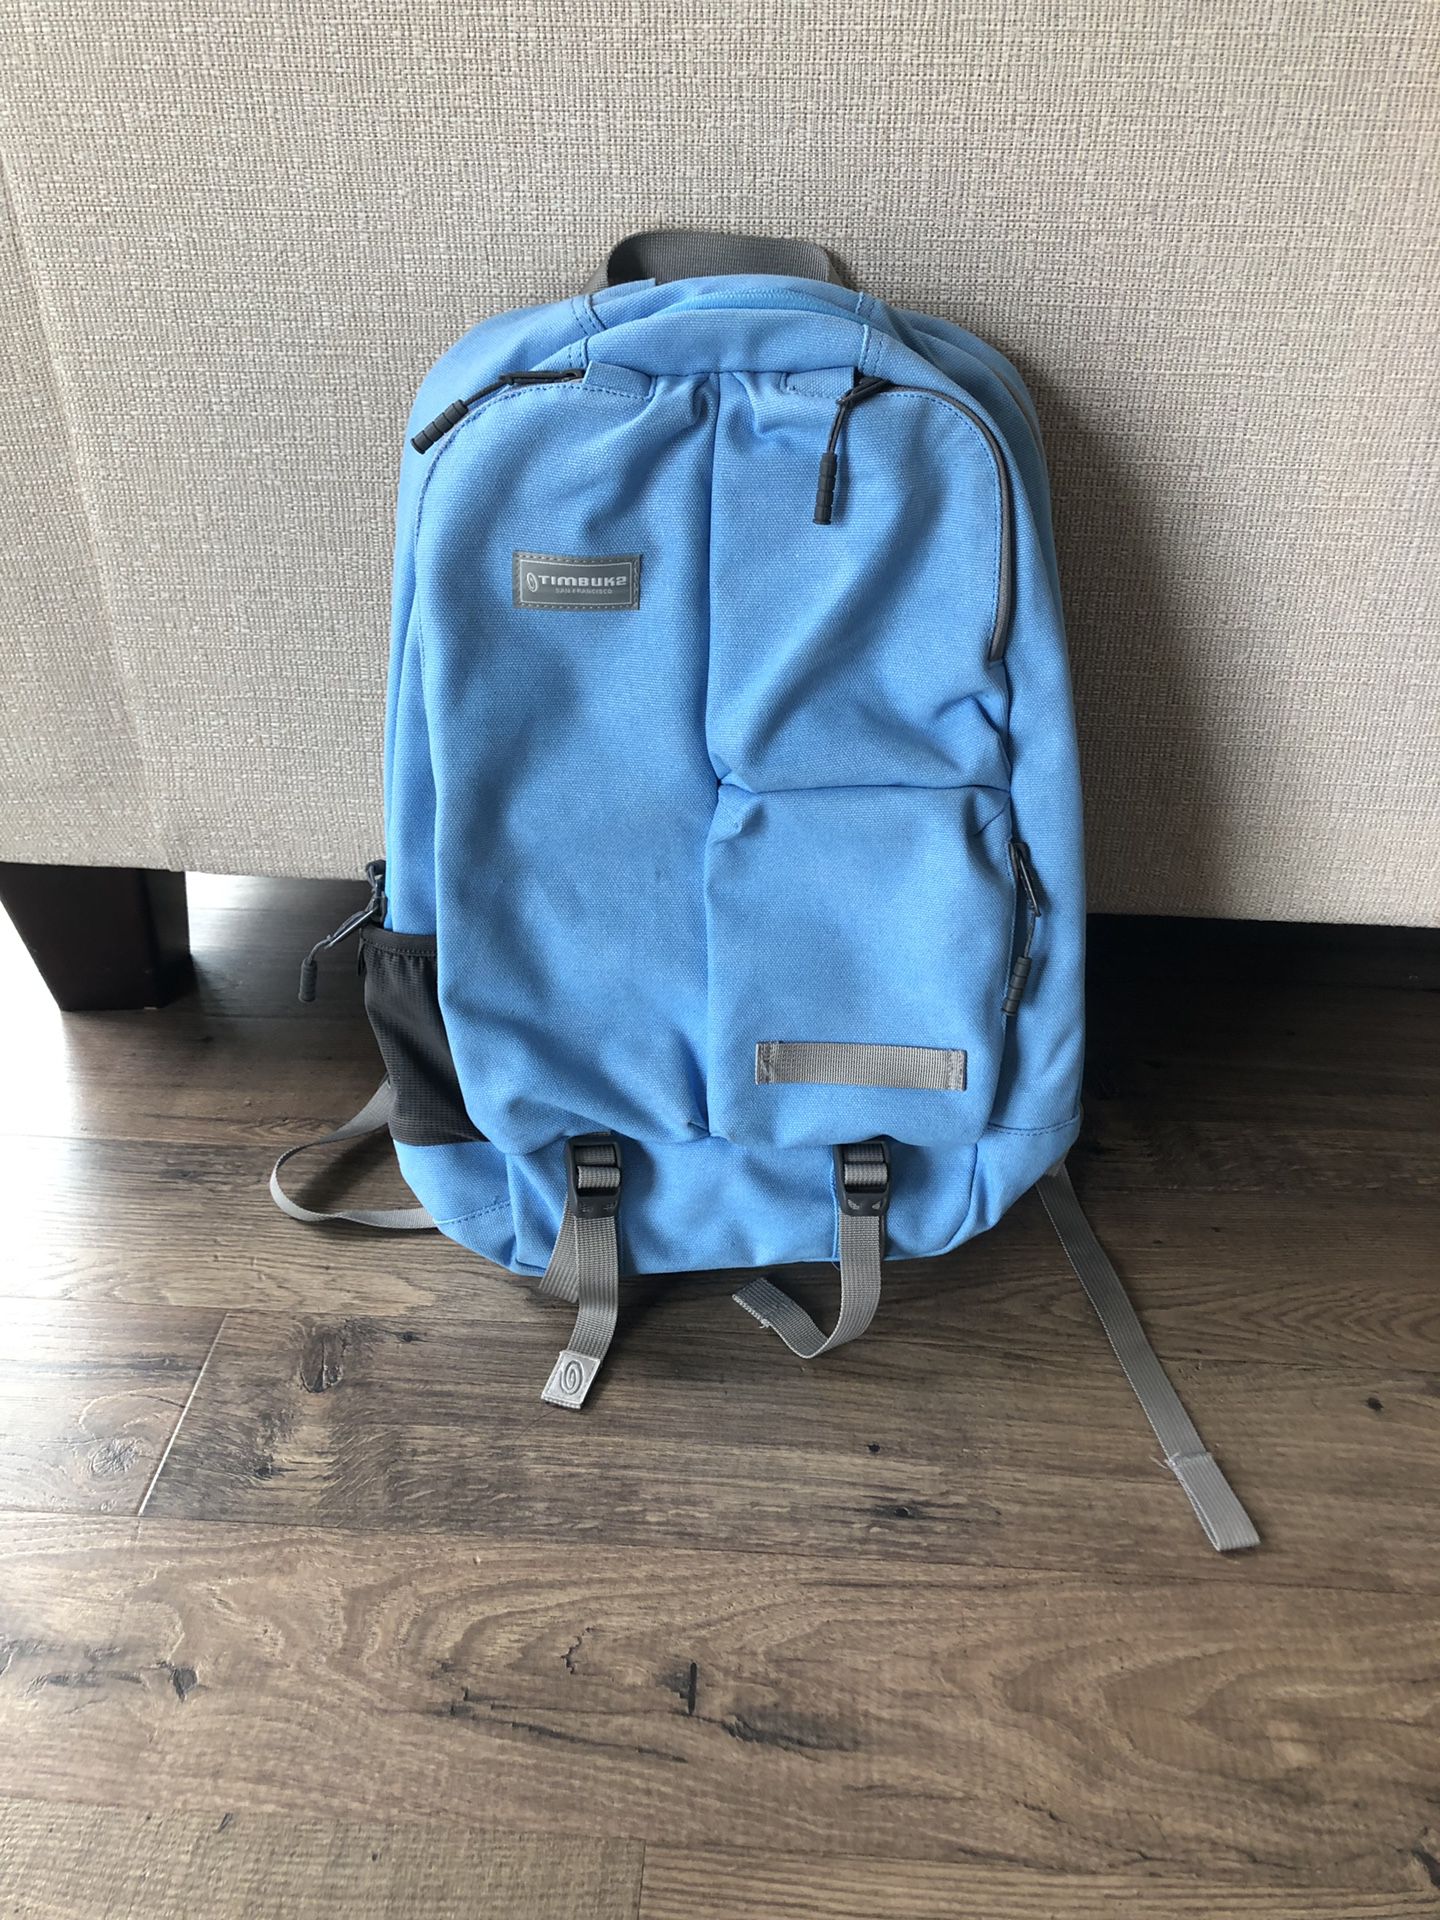 Timbuk2 laptop backpack